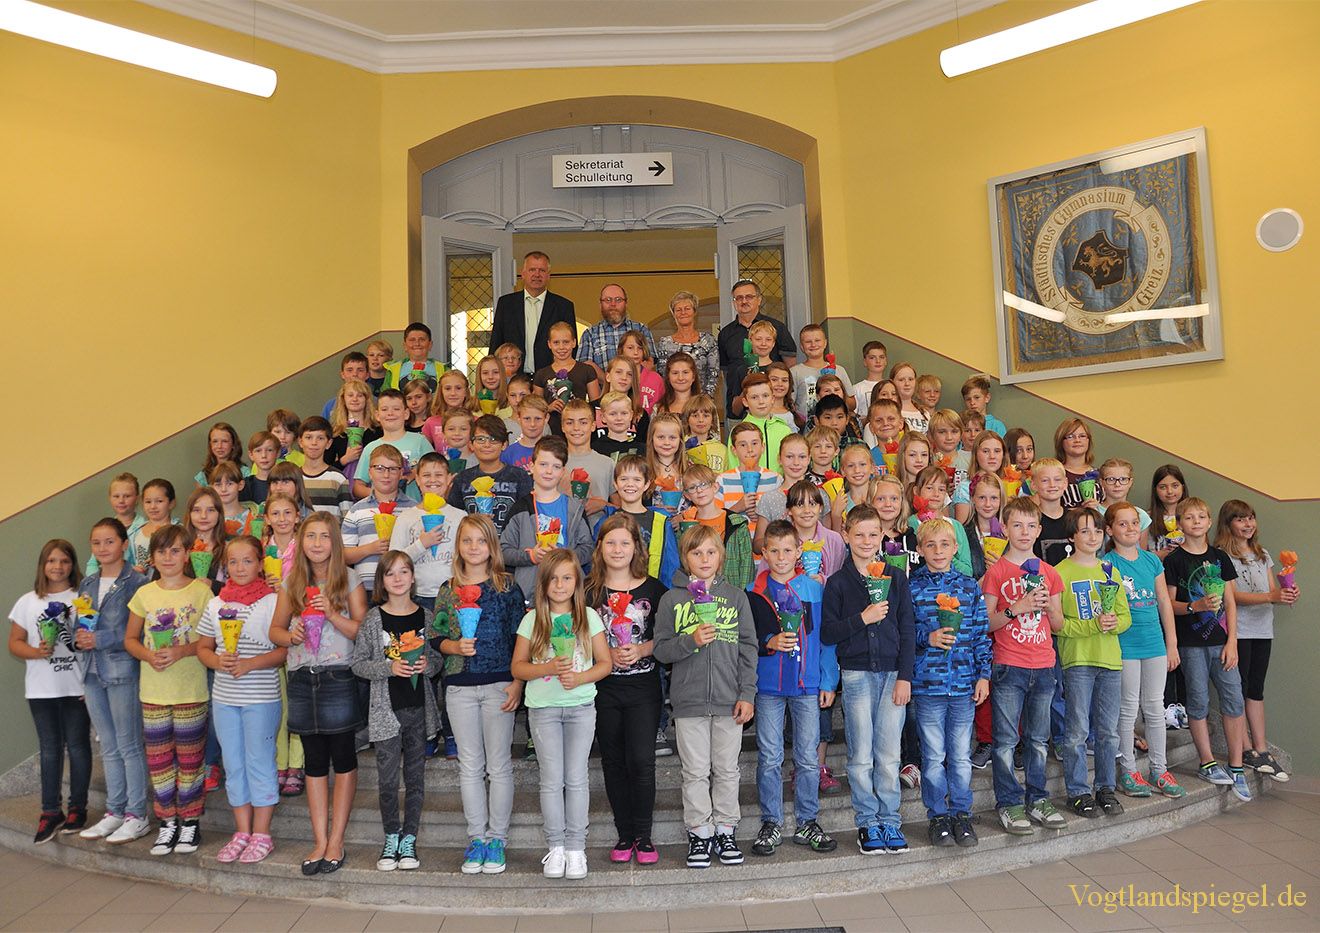 83 neue Schüler am Greizer Ulf-Merbold-Gymnasium begrüßt